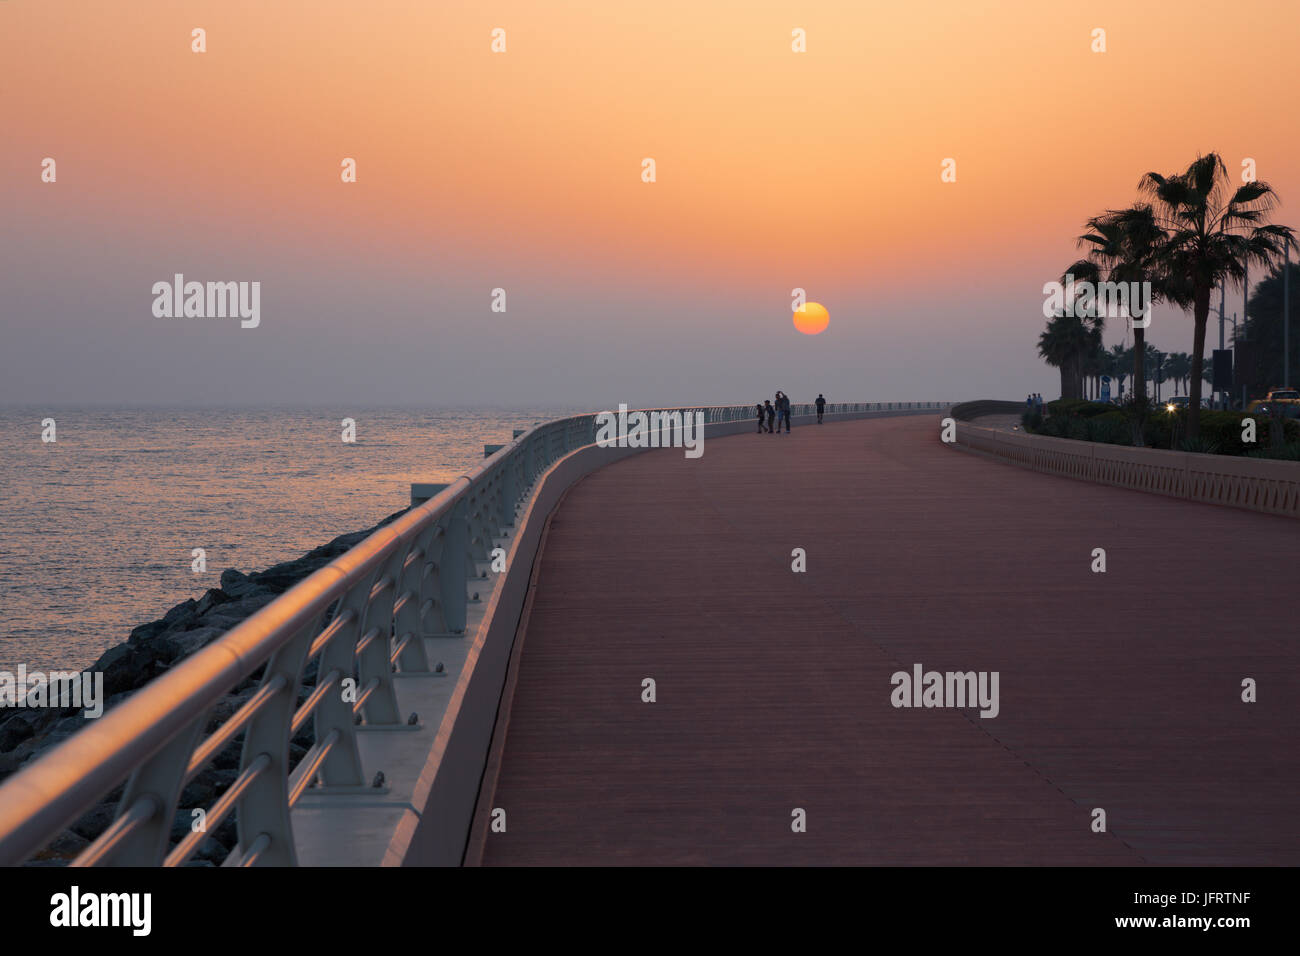 Dubai - The promenade of Palm Island at the sunset. Stock Photo